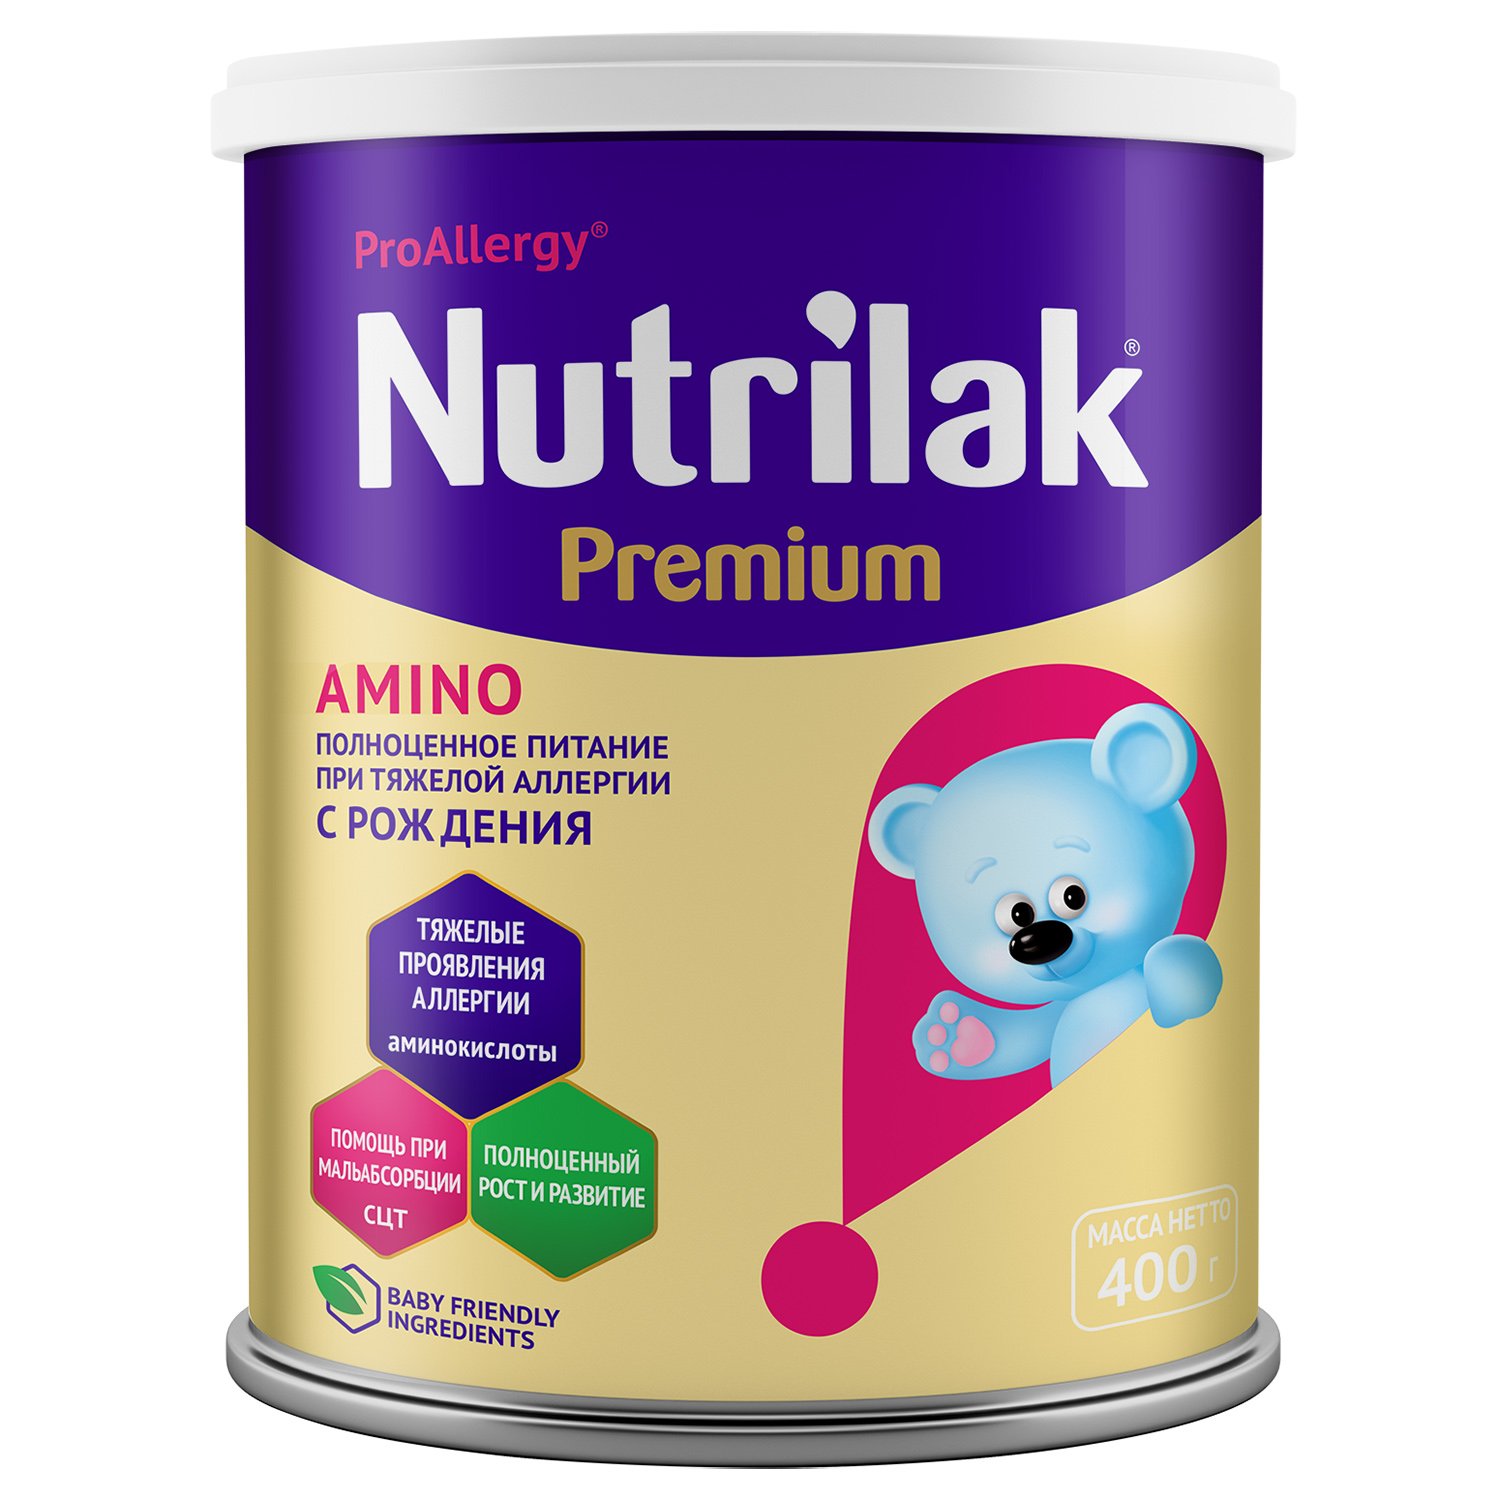 ProAllergy Nutrilak Premium Amino смесь сухая при тяжелой аллергии 0+месяцев 400г